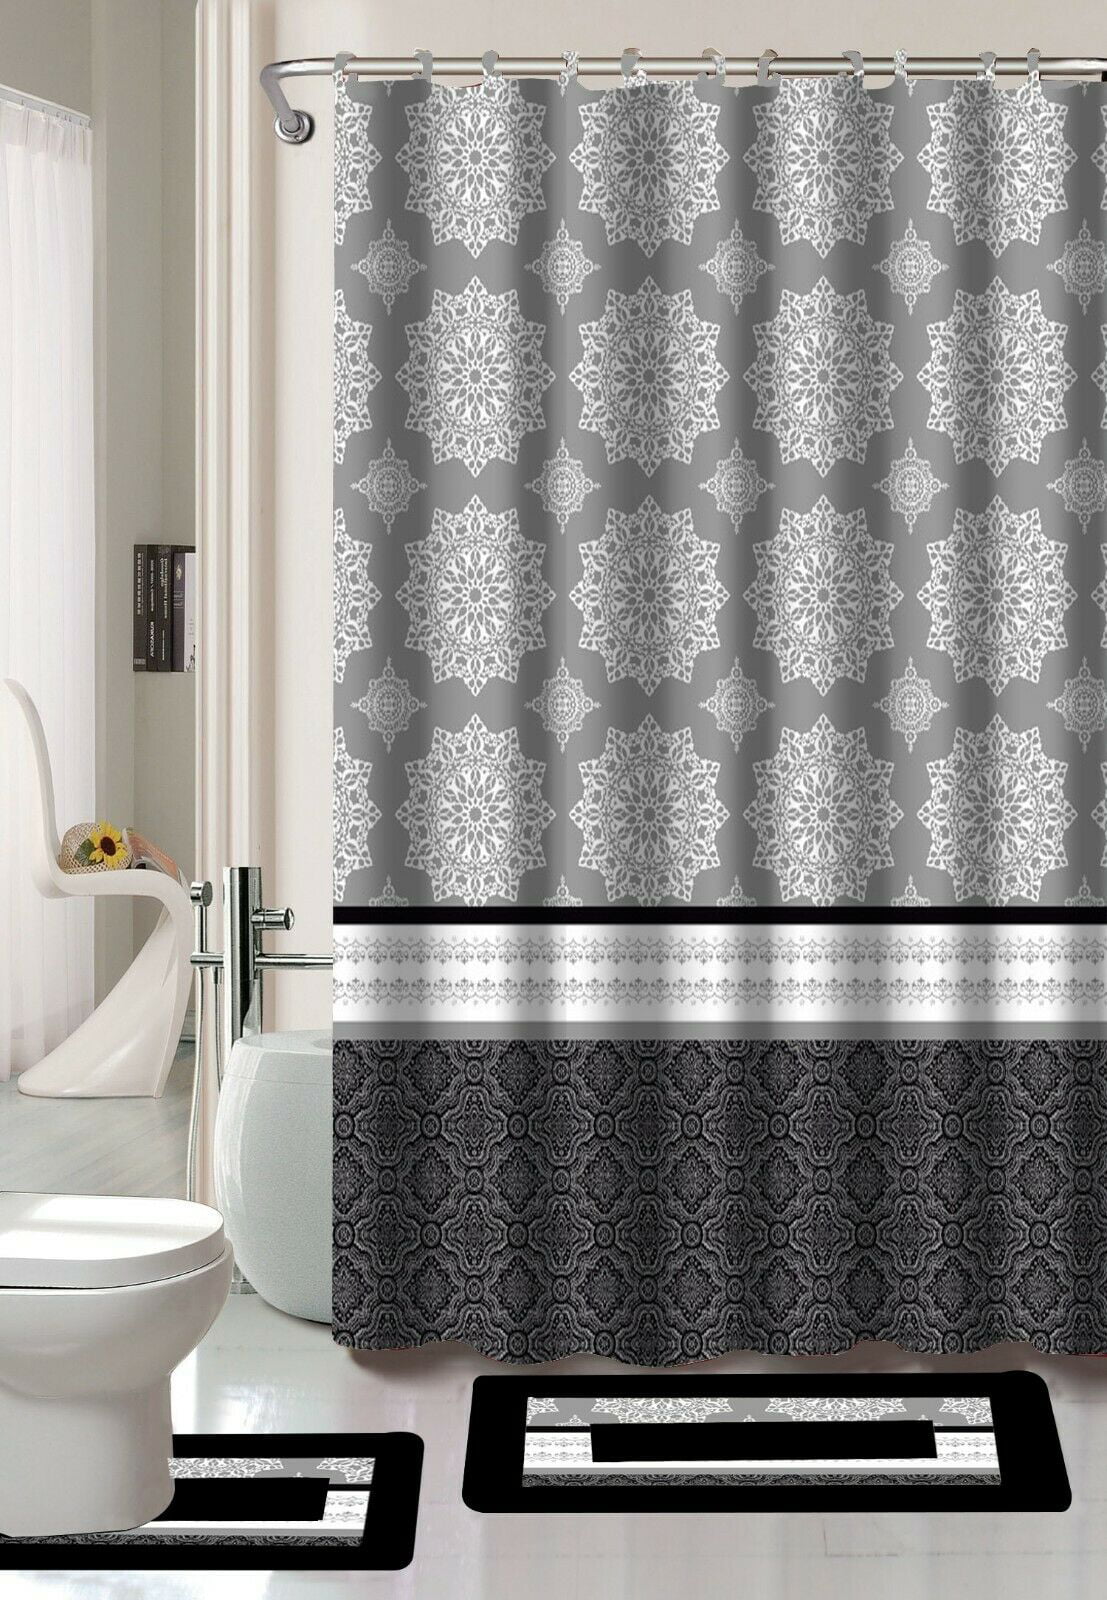 Hazy Female Nude Shower Curtain Liner Bathroom Mat Set Polyester Fabric Hooks 